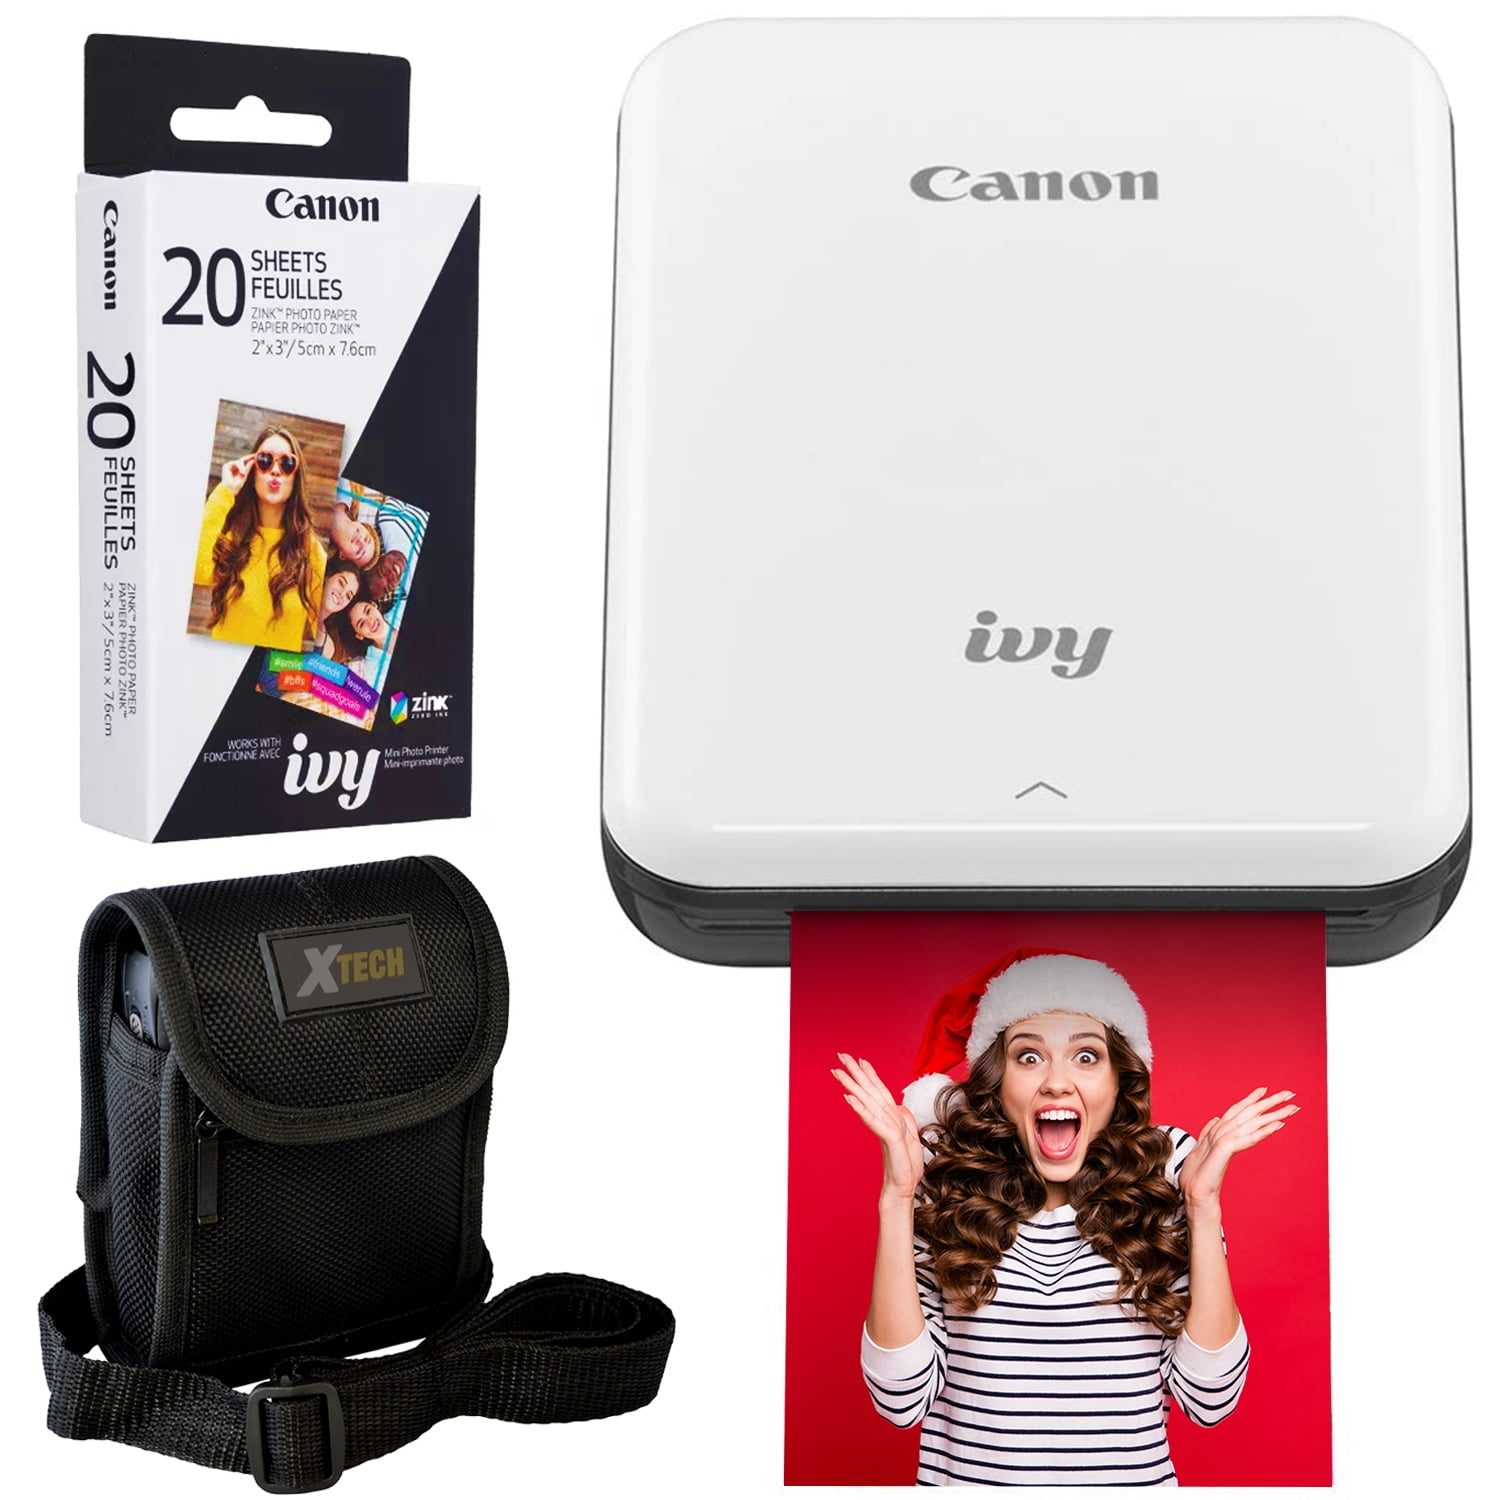  Canon Ivy 2 Mini Photo Printer, Pure White & Ivy Zink